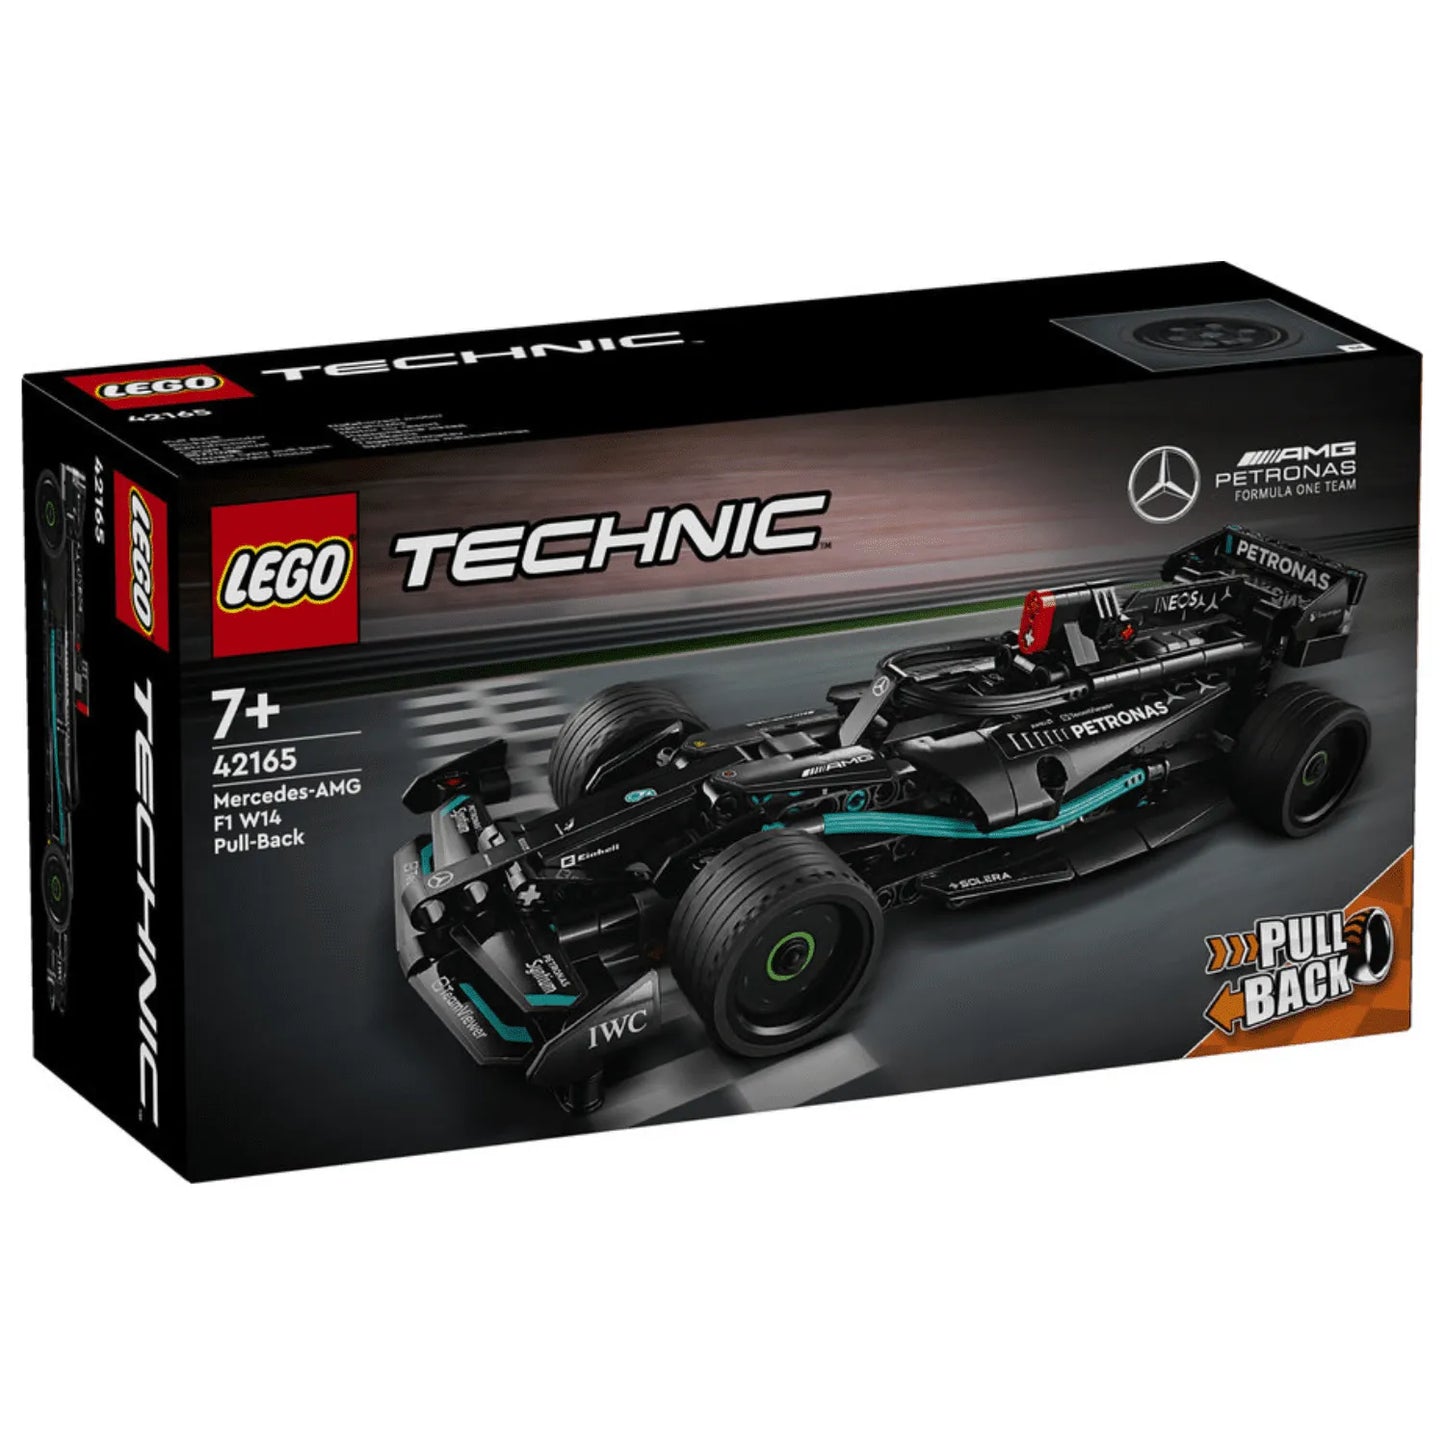 LEGO TECHNIC  - Mercedes-AMG F1 W14 E Performance Pull-Back - 42165